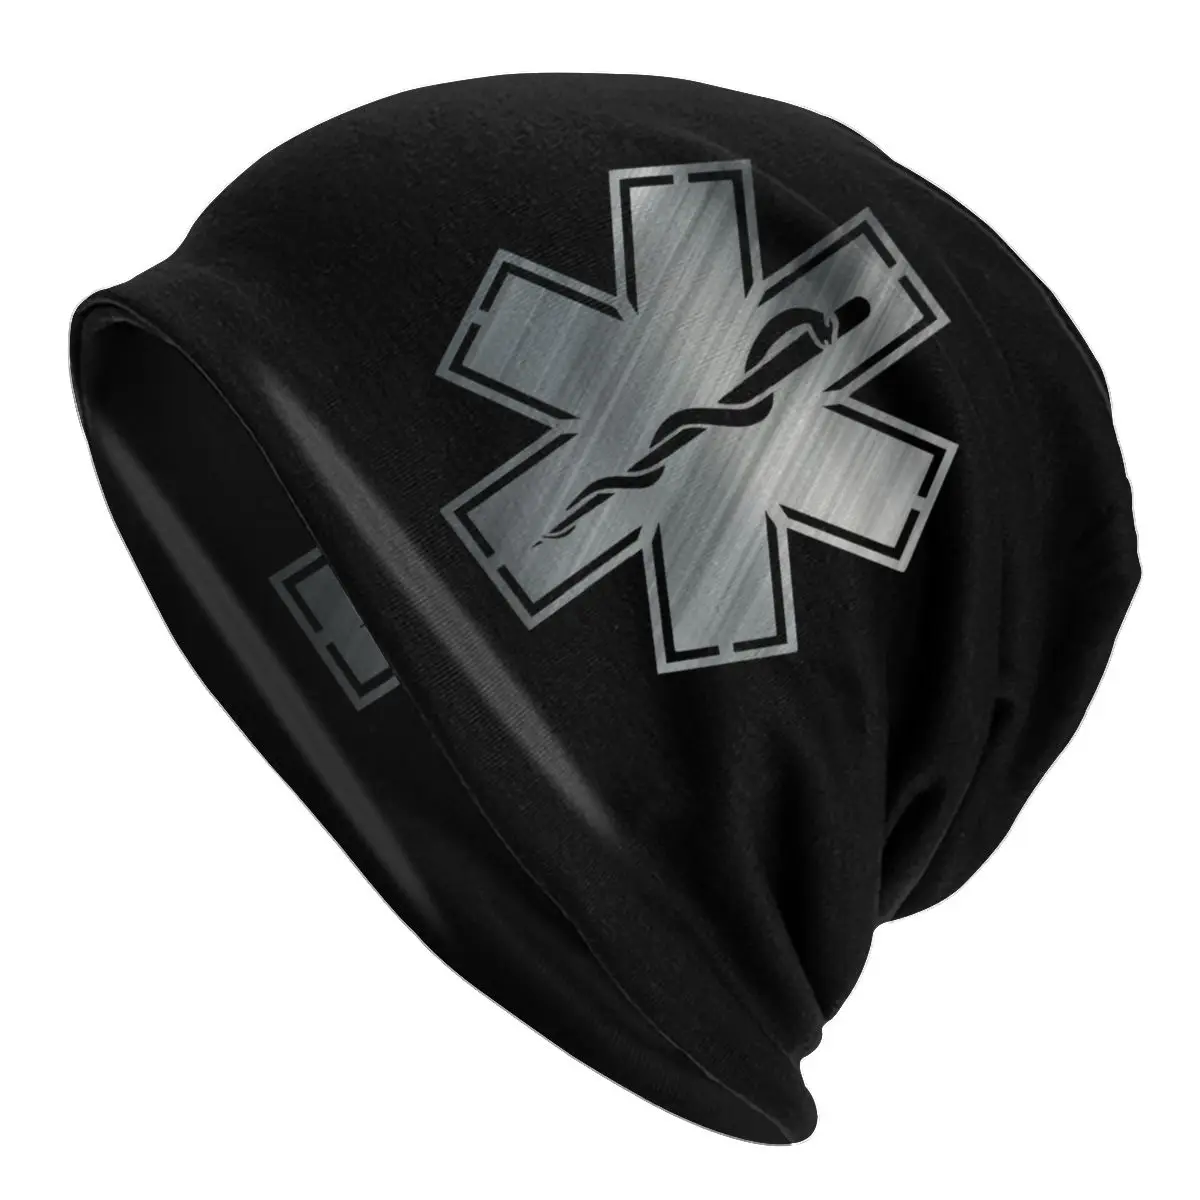 Emt Star Of Life Bonnet Hats Femme Cool Knitted Hat For Men Women Warm Winter Paramedic Medic Skullies Beanies Caps 1